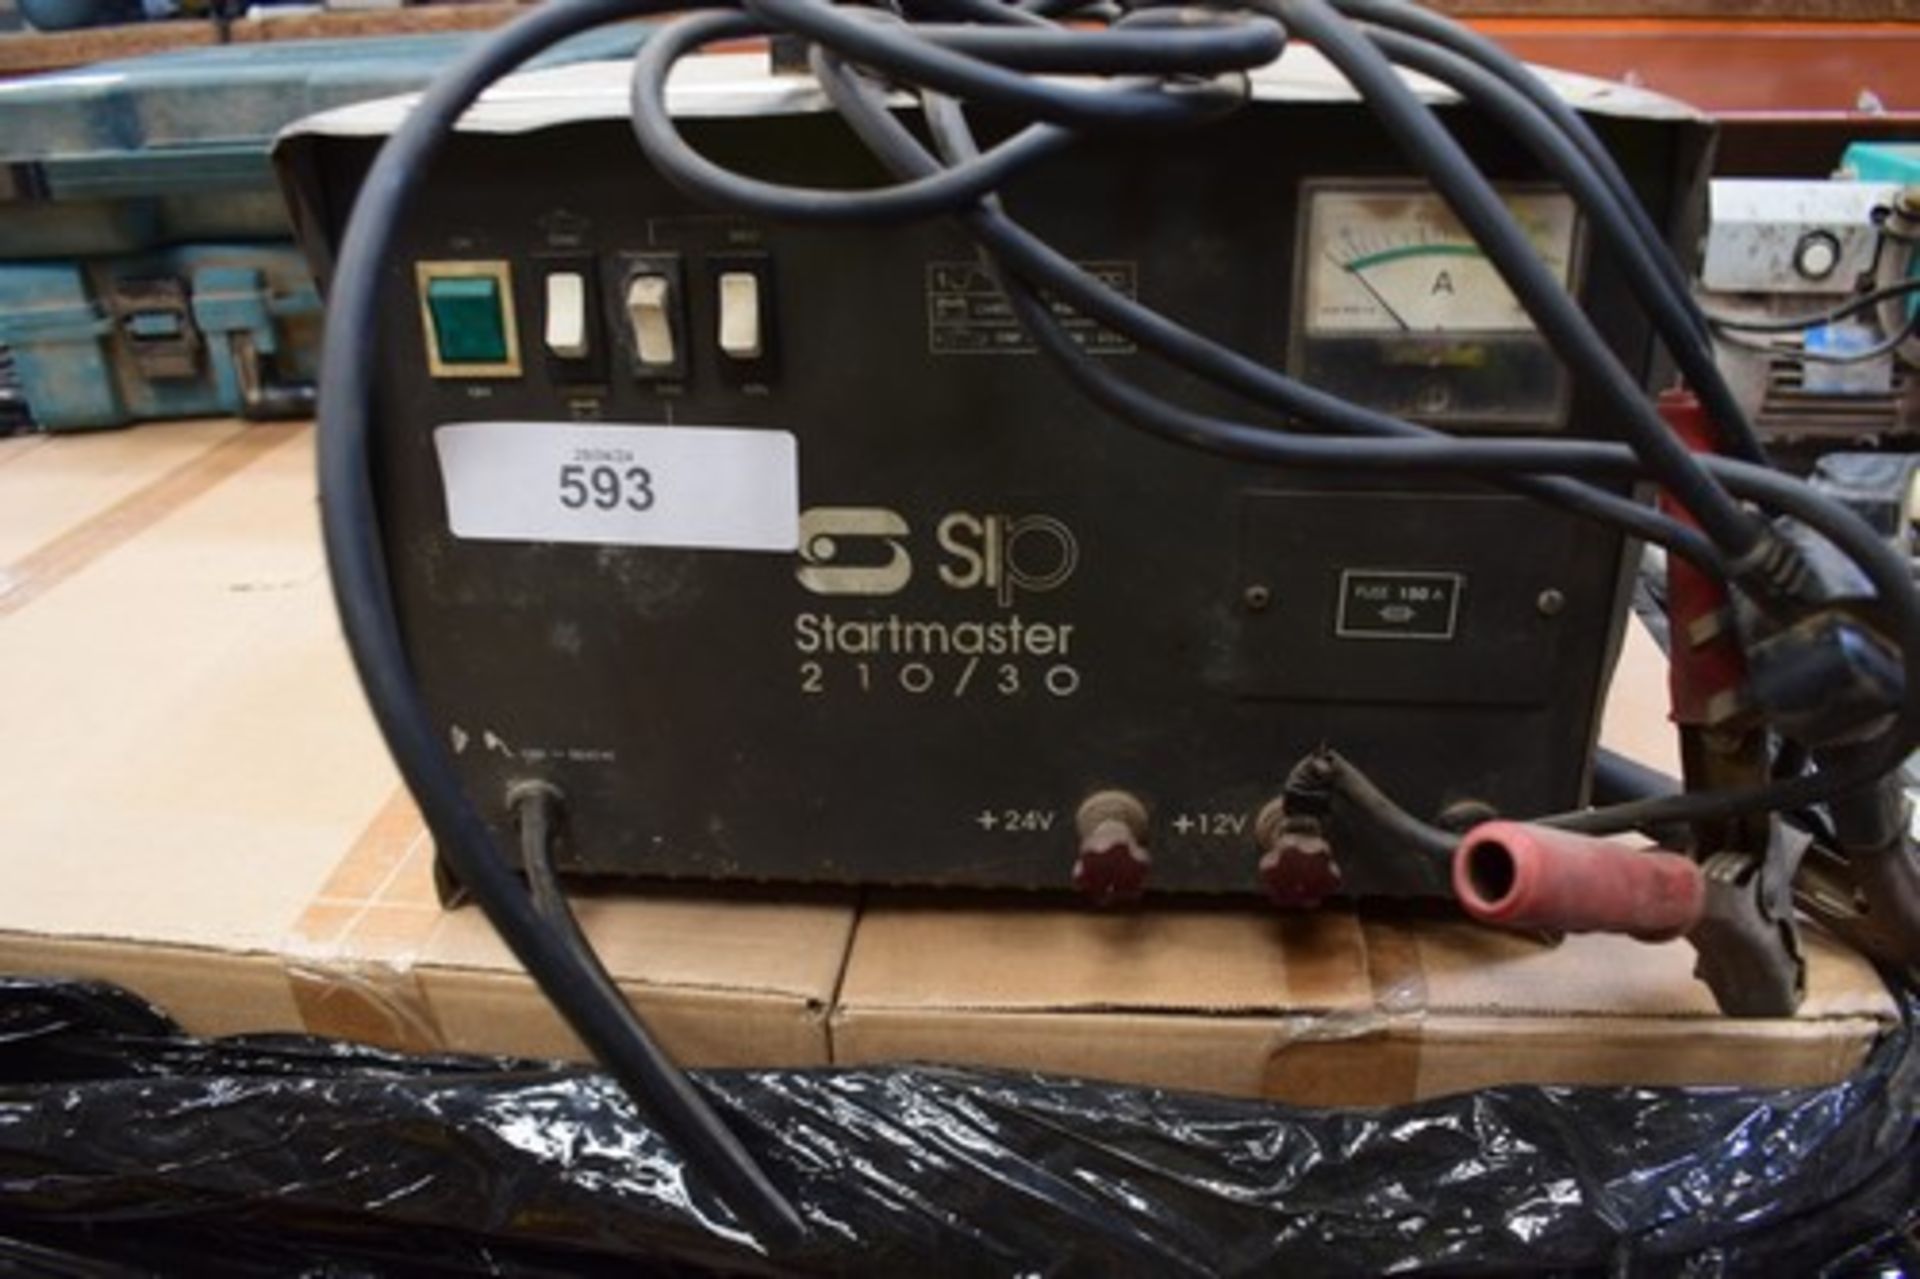 1 x Sip Startmaster, 210/30 240v 30a, 12v/24v output - second-hand (SW)